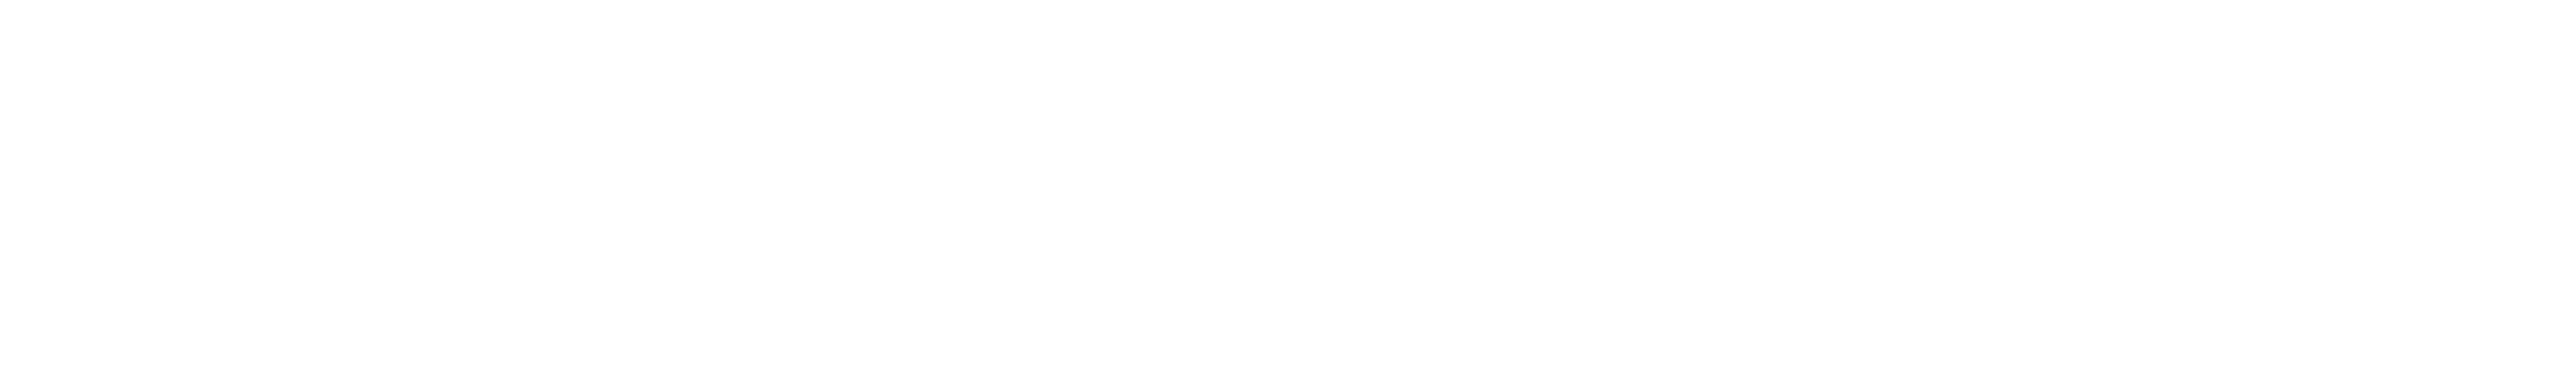 Mr. Robot logo